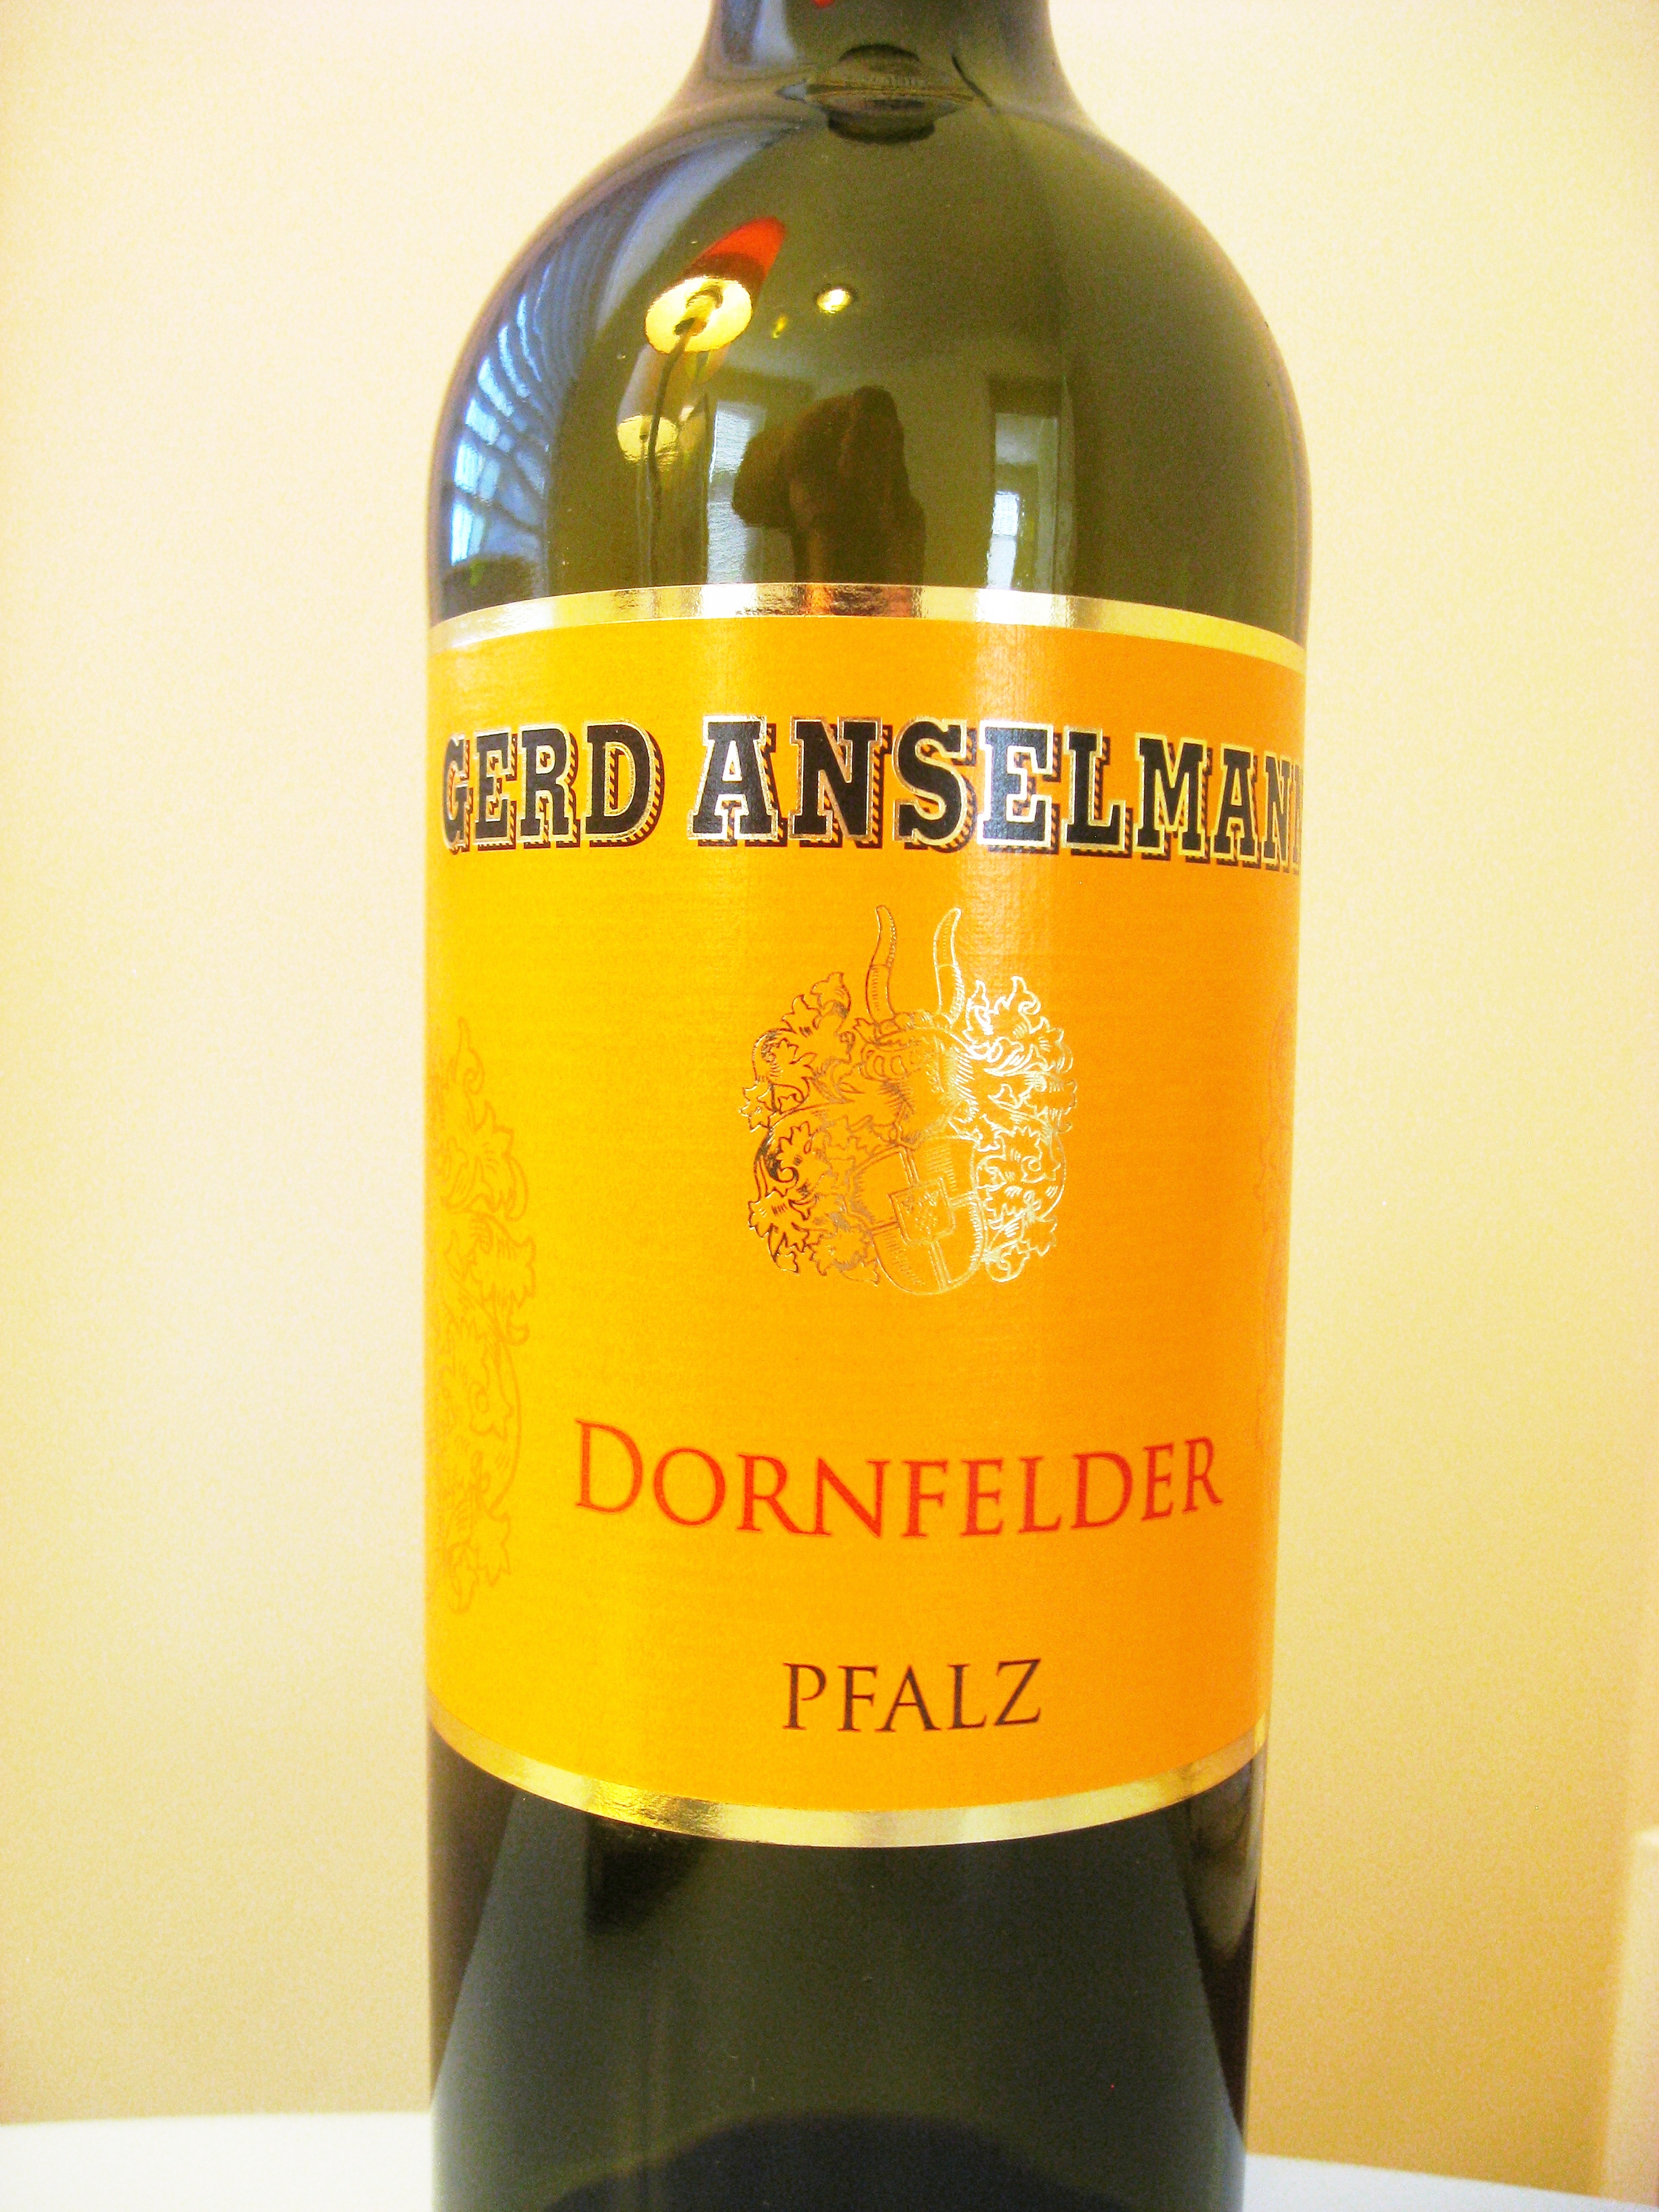 Gerd Anselmann, Dornfelder 2012, Pfalz, Germany, Wine Casual